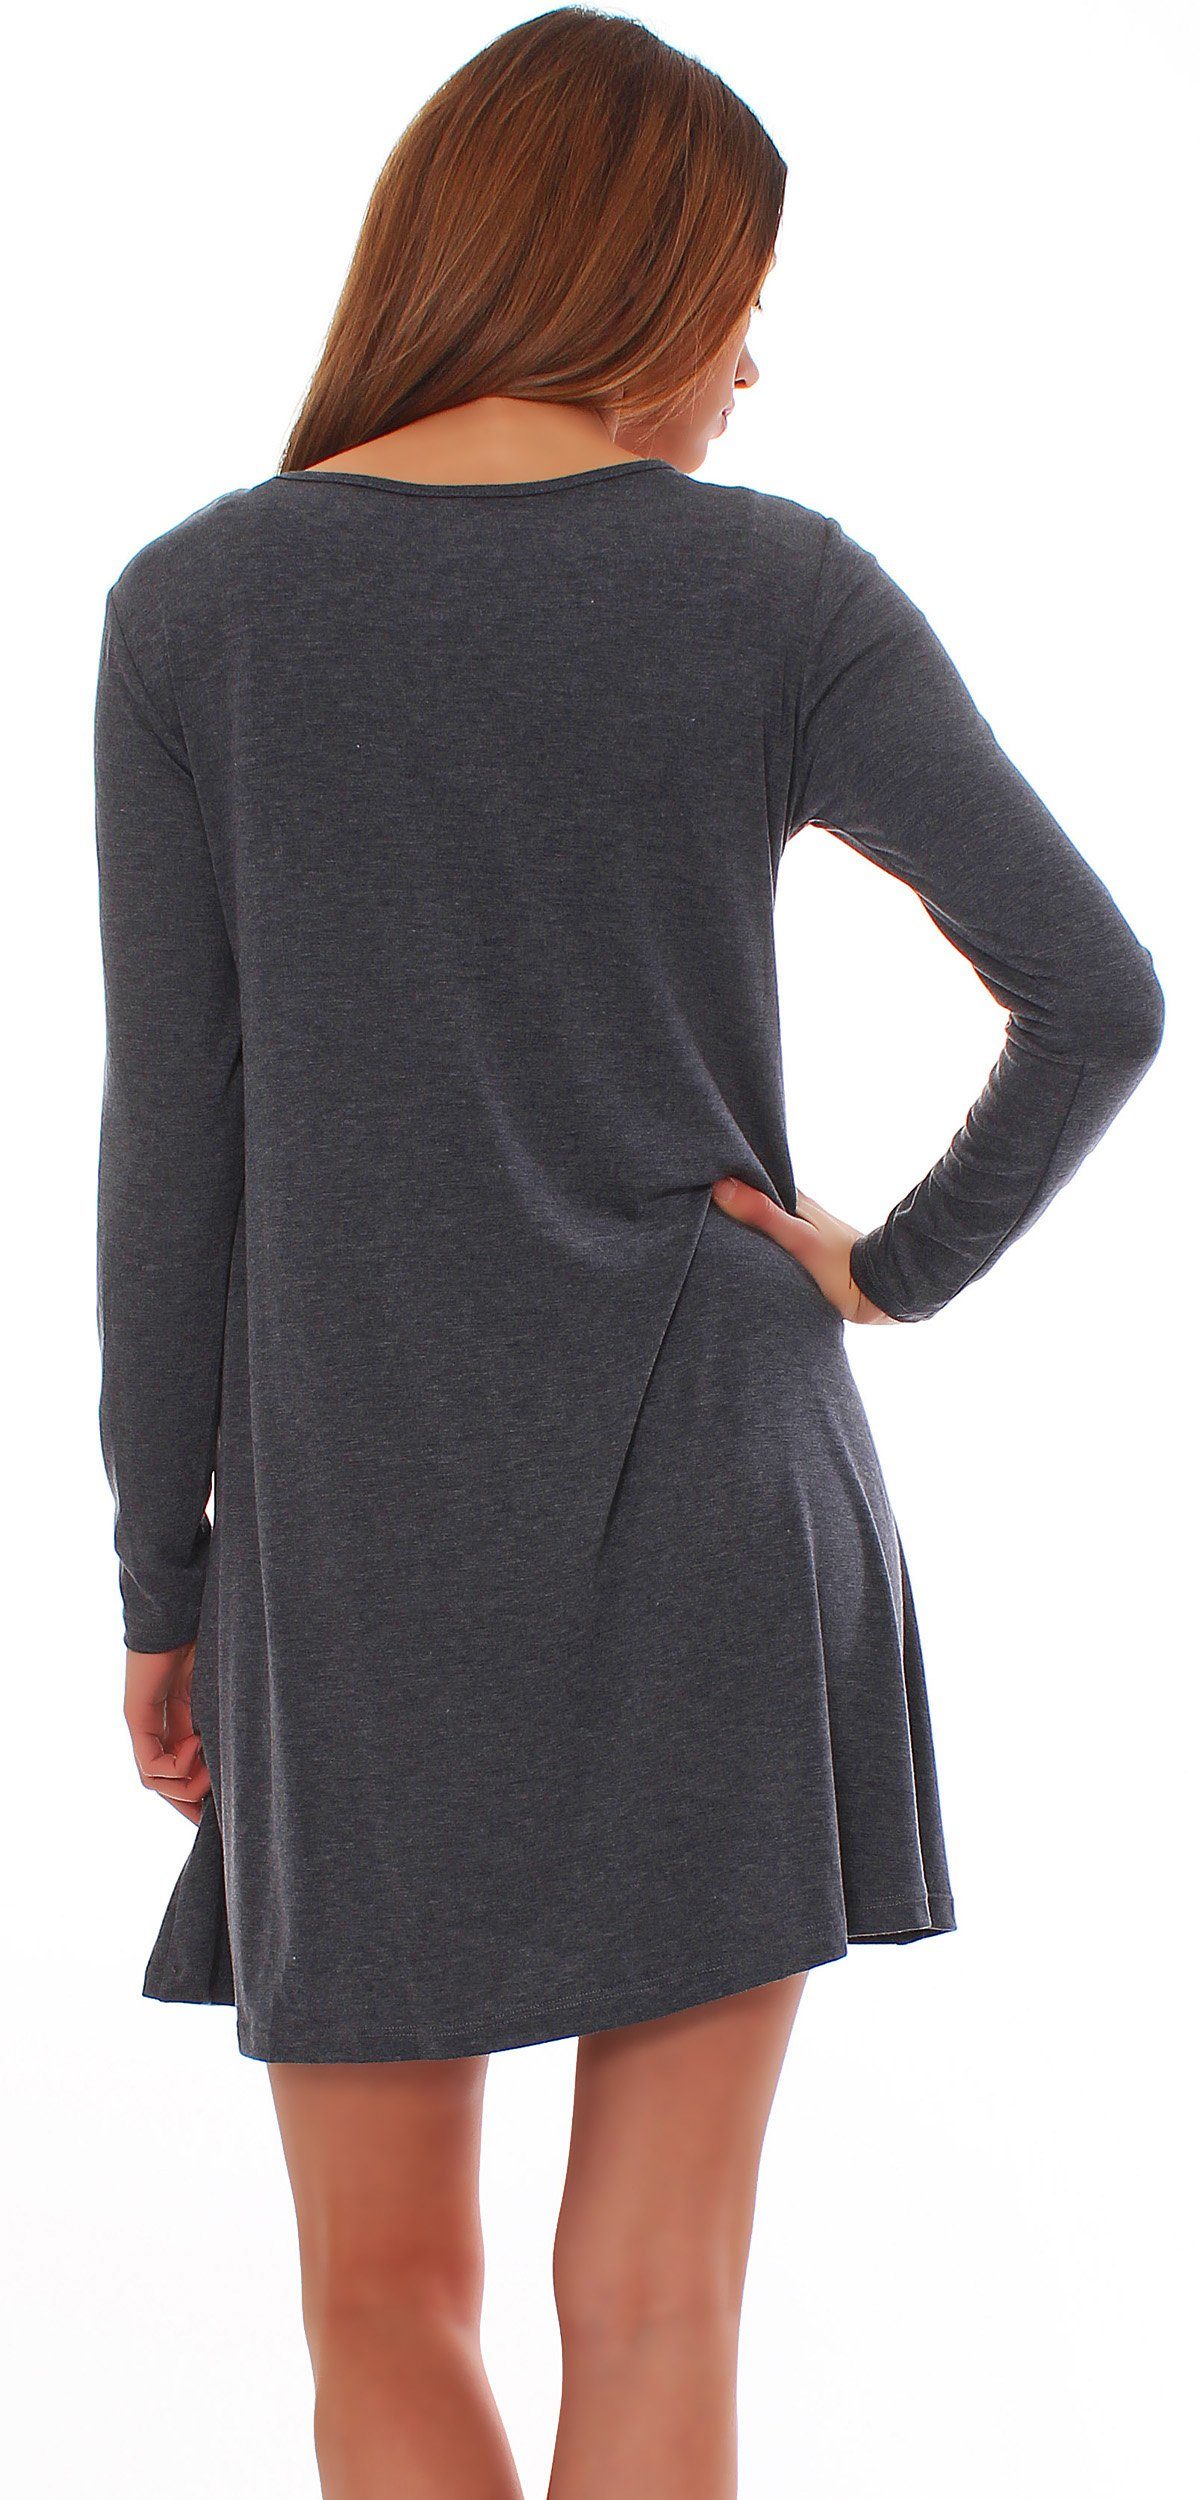 Taschen Longshirt Pulli mit Tunika 6514 Graphit_Lang Minikleid Tunika Mississhop Kleid A-Linien-Kleid